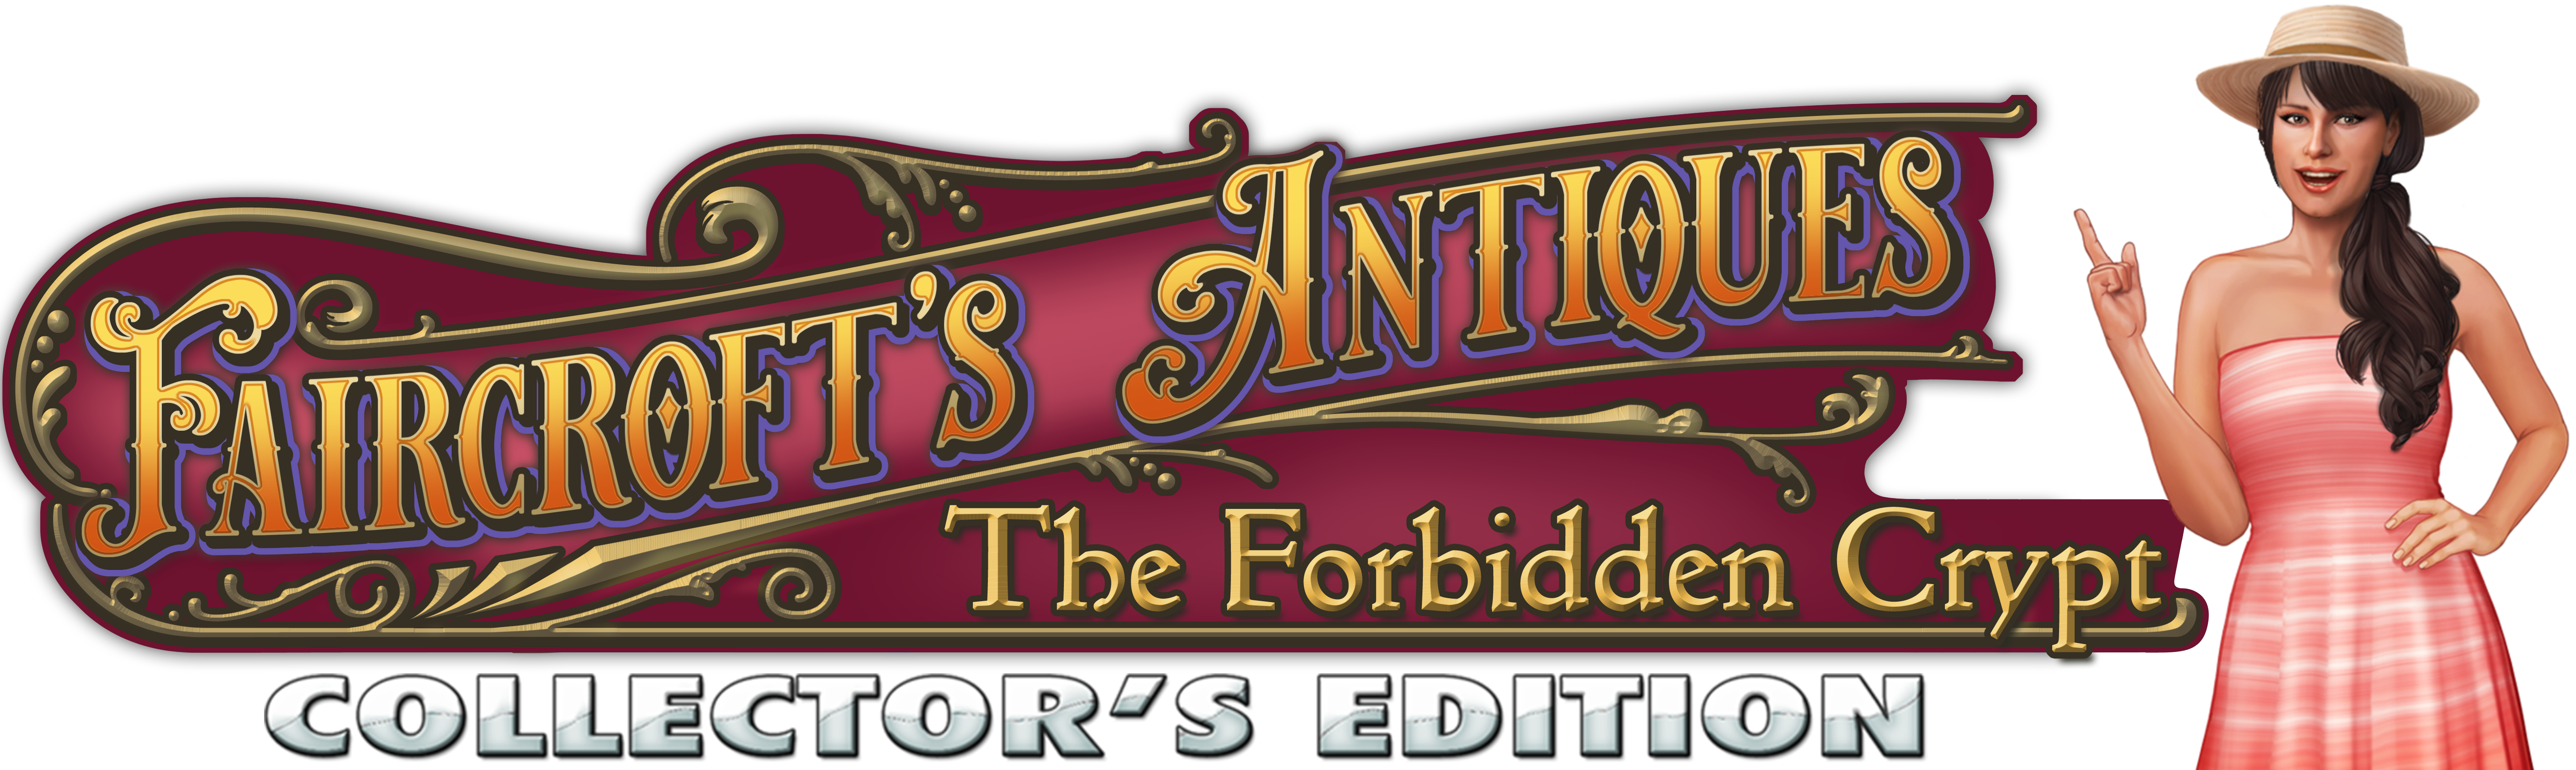 Faircroft's Antiques The Forbidden Crypt Collector's Edition